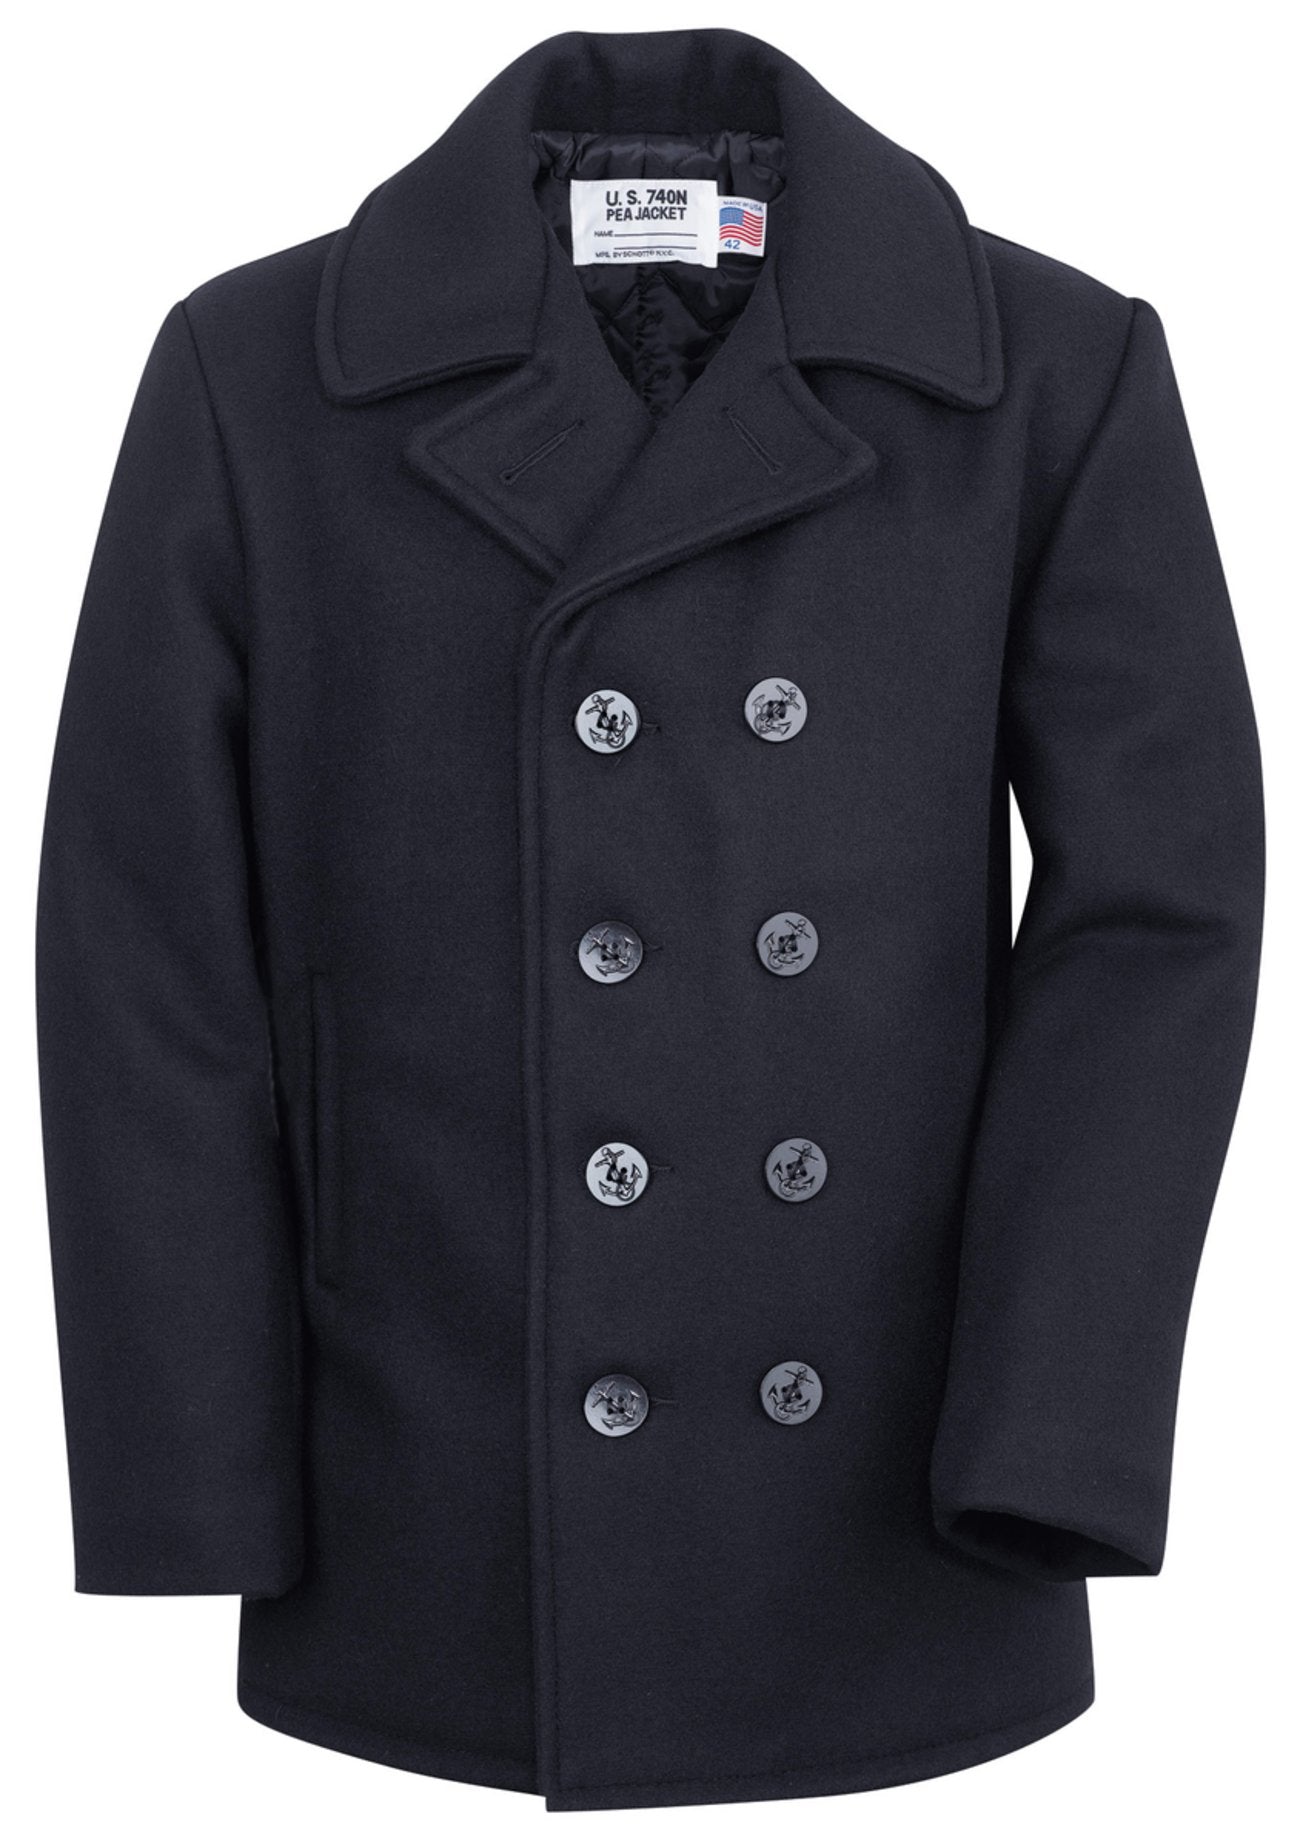 Schott's Classic Melton Wool Navy Pea Coat (740NVY)